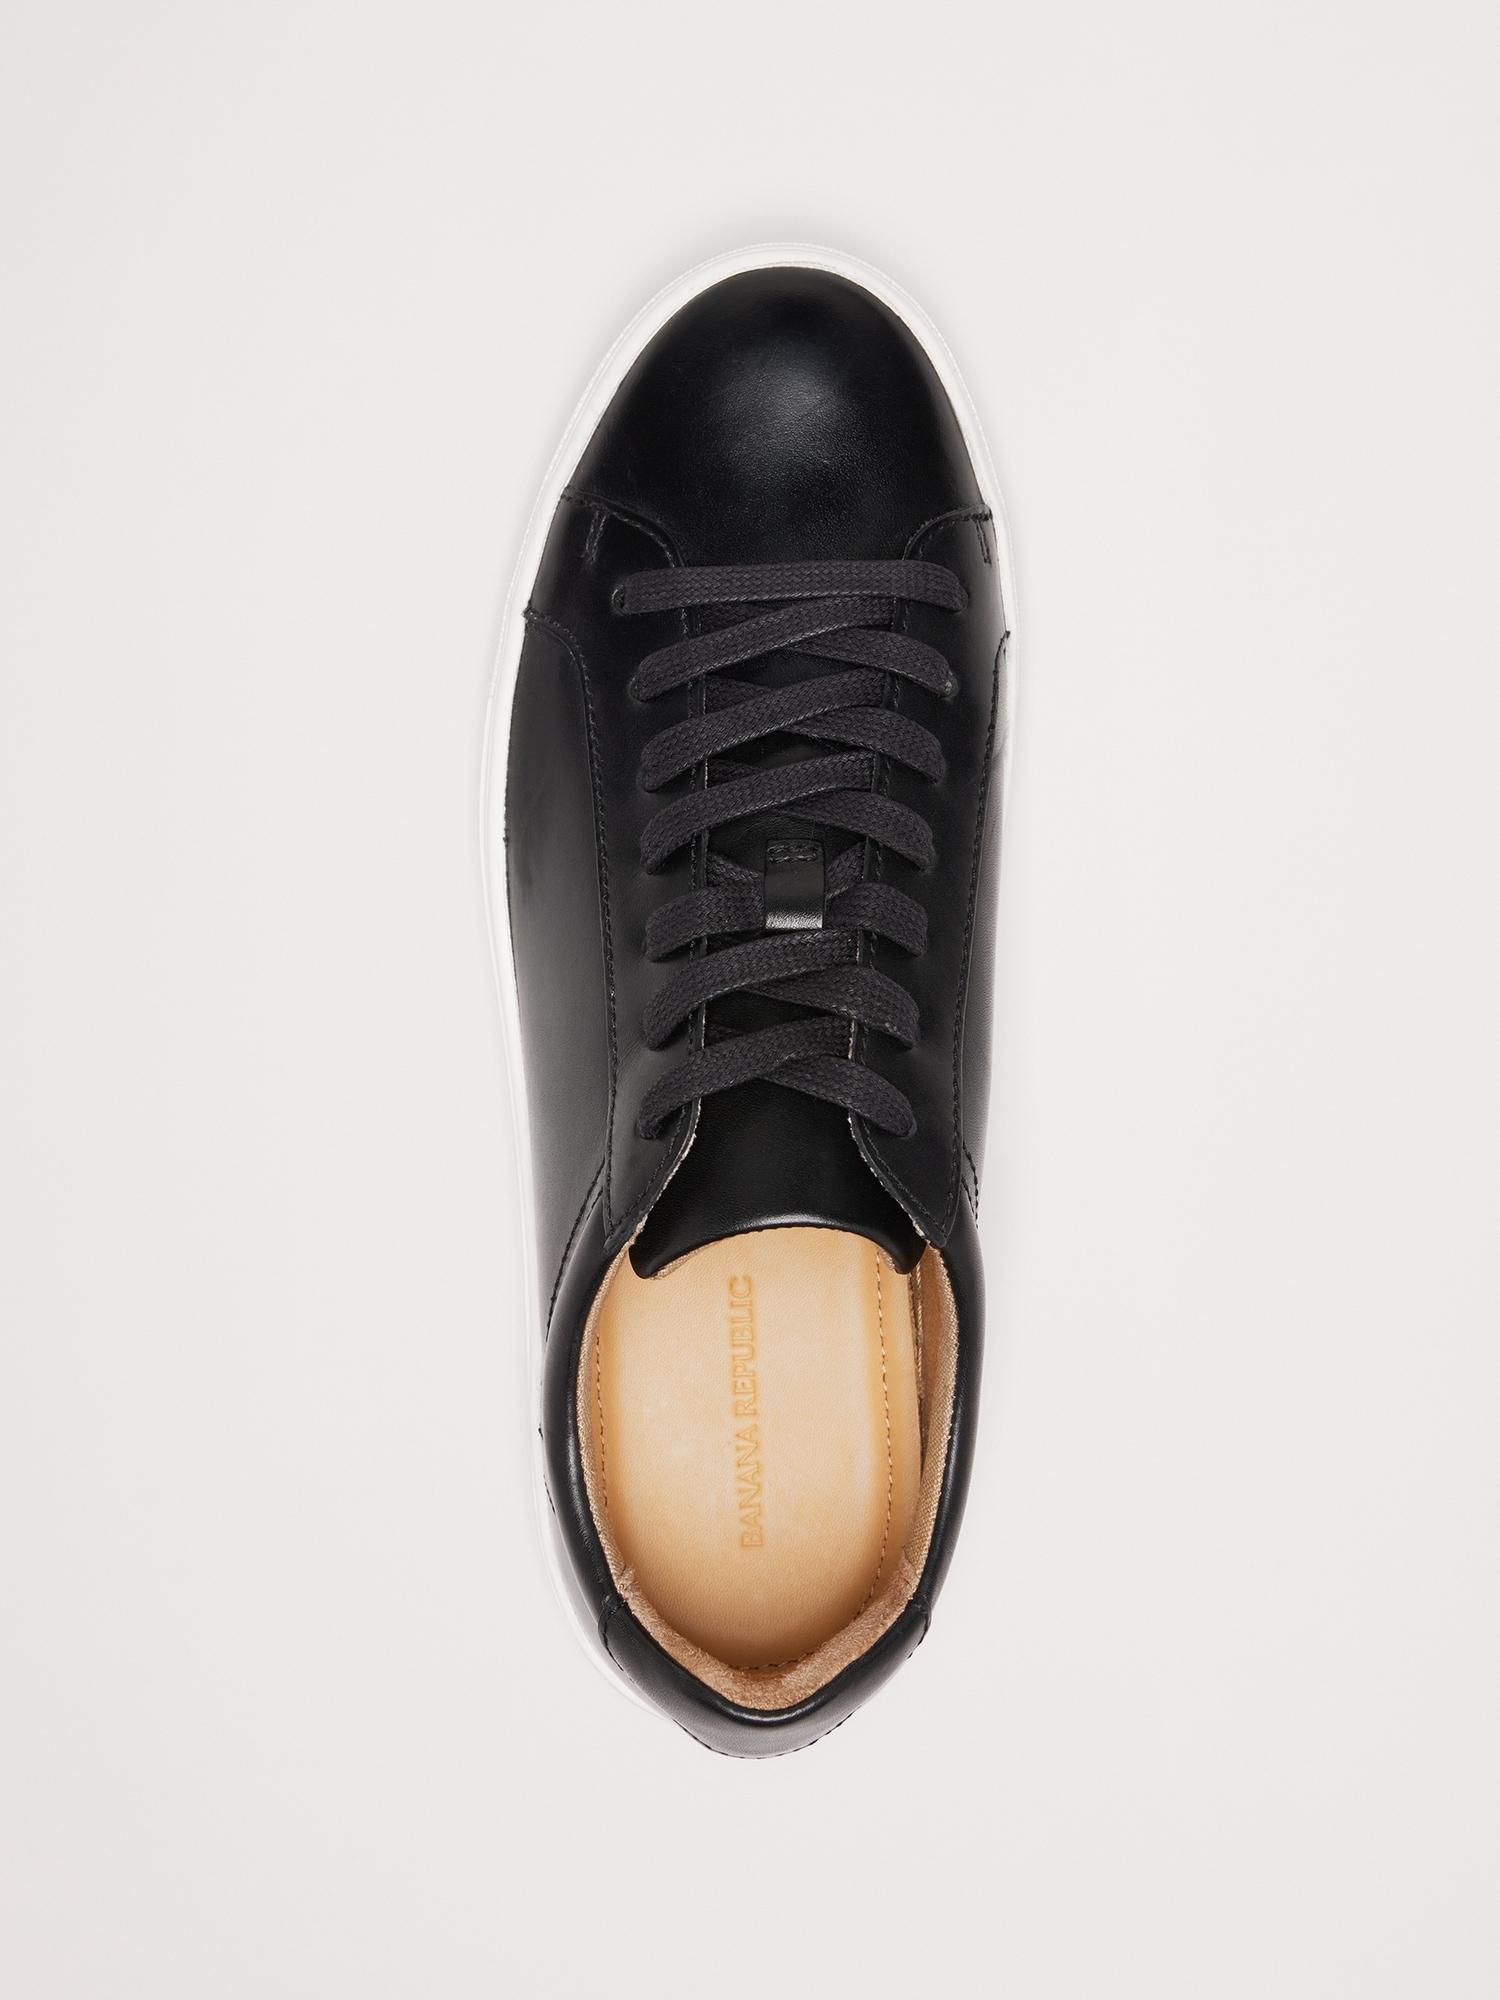 Nickola Leather Sneaker